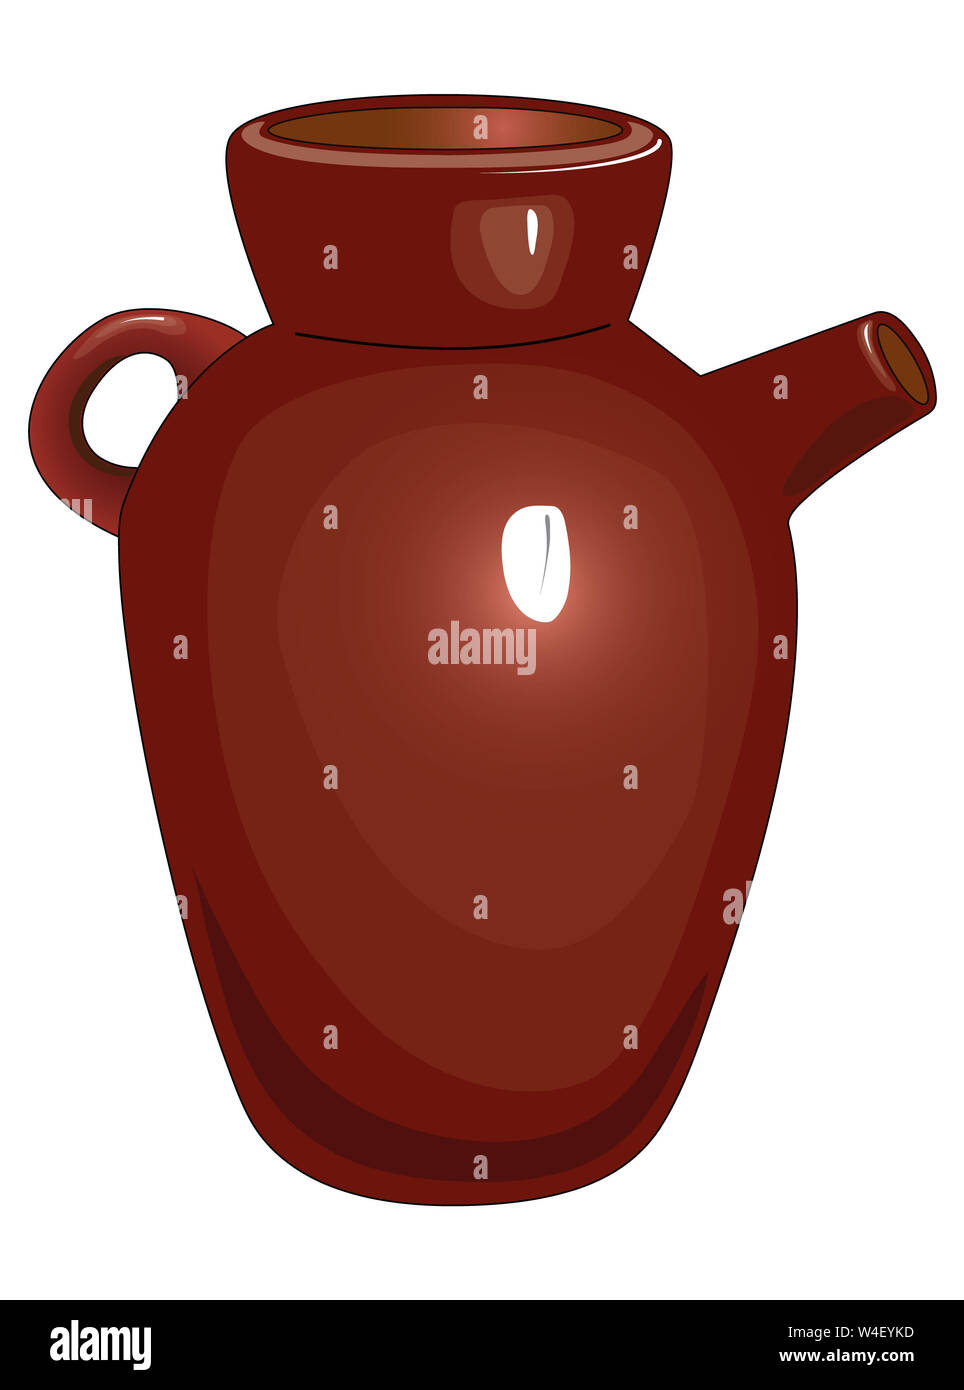 Keramik Krug .Keramik .. Ein Behälter für Getränke .Illustration Stockfoto